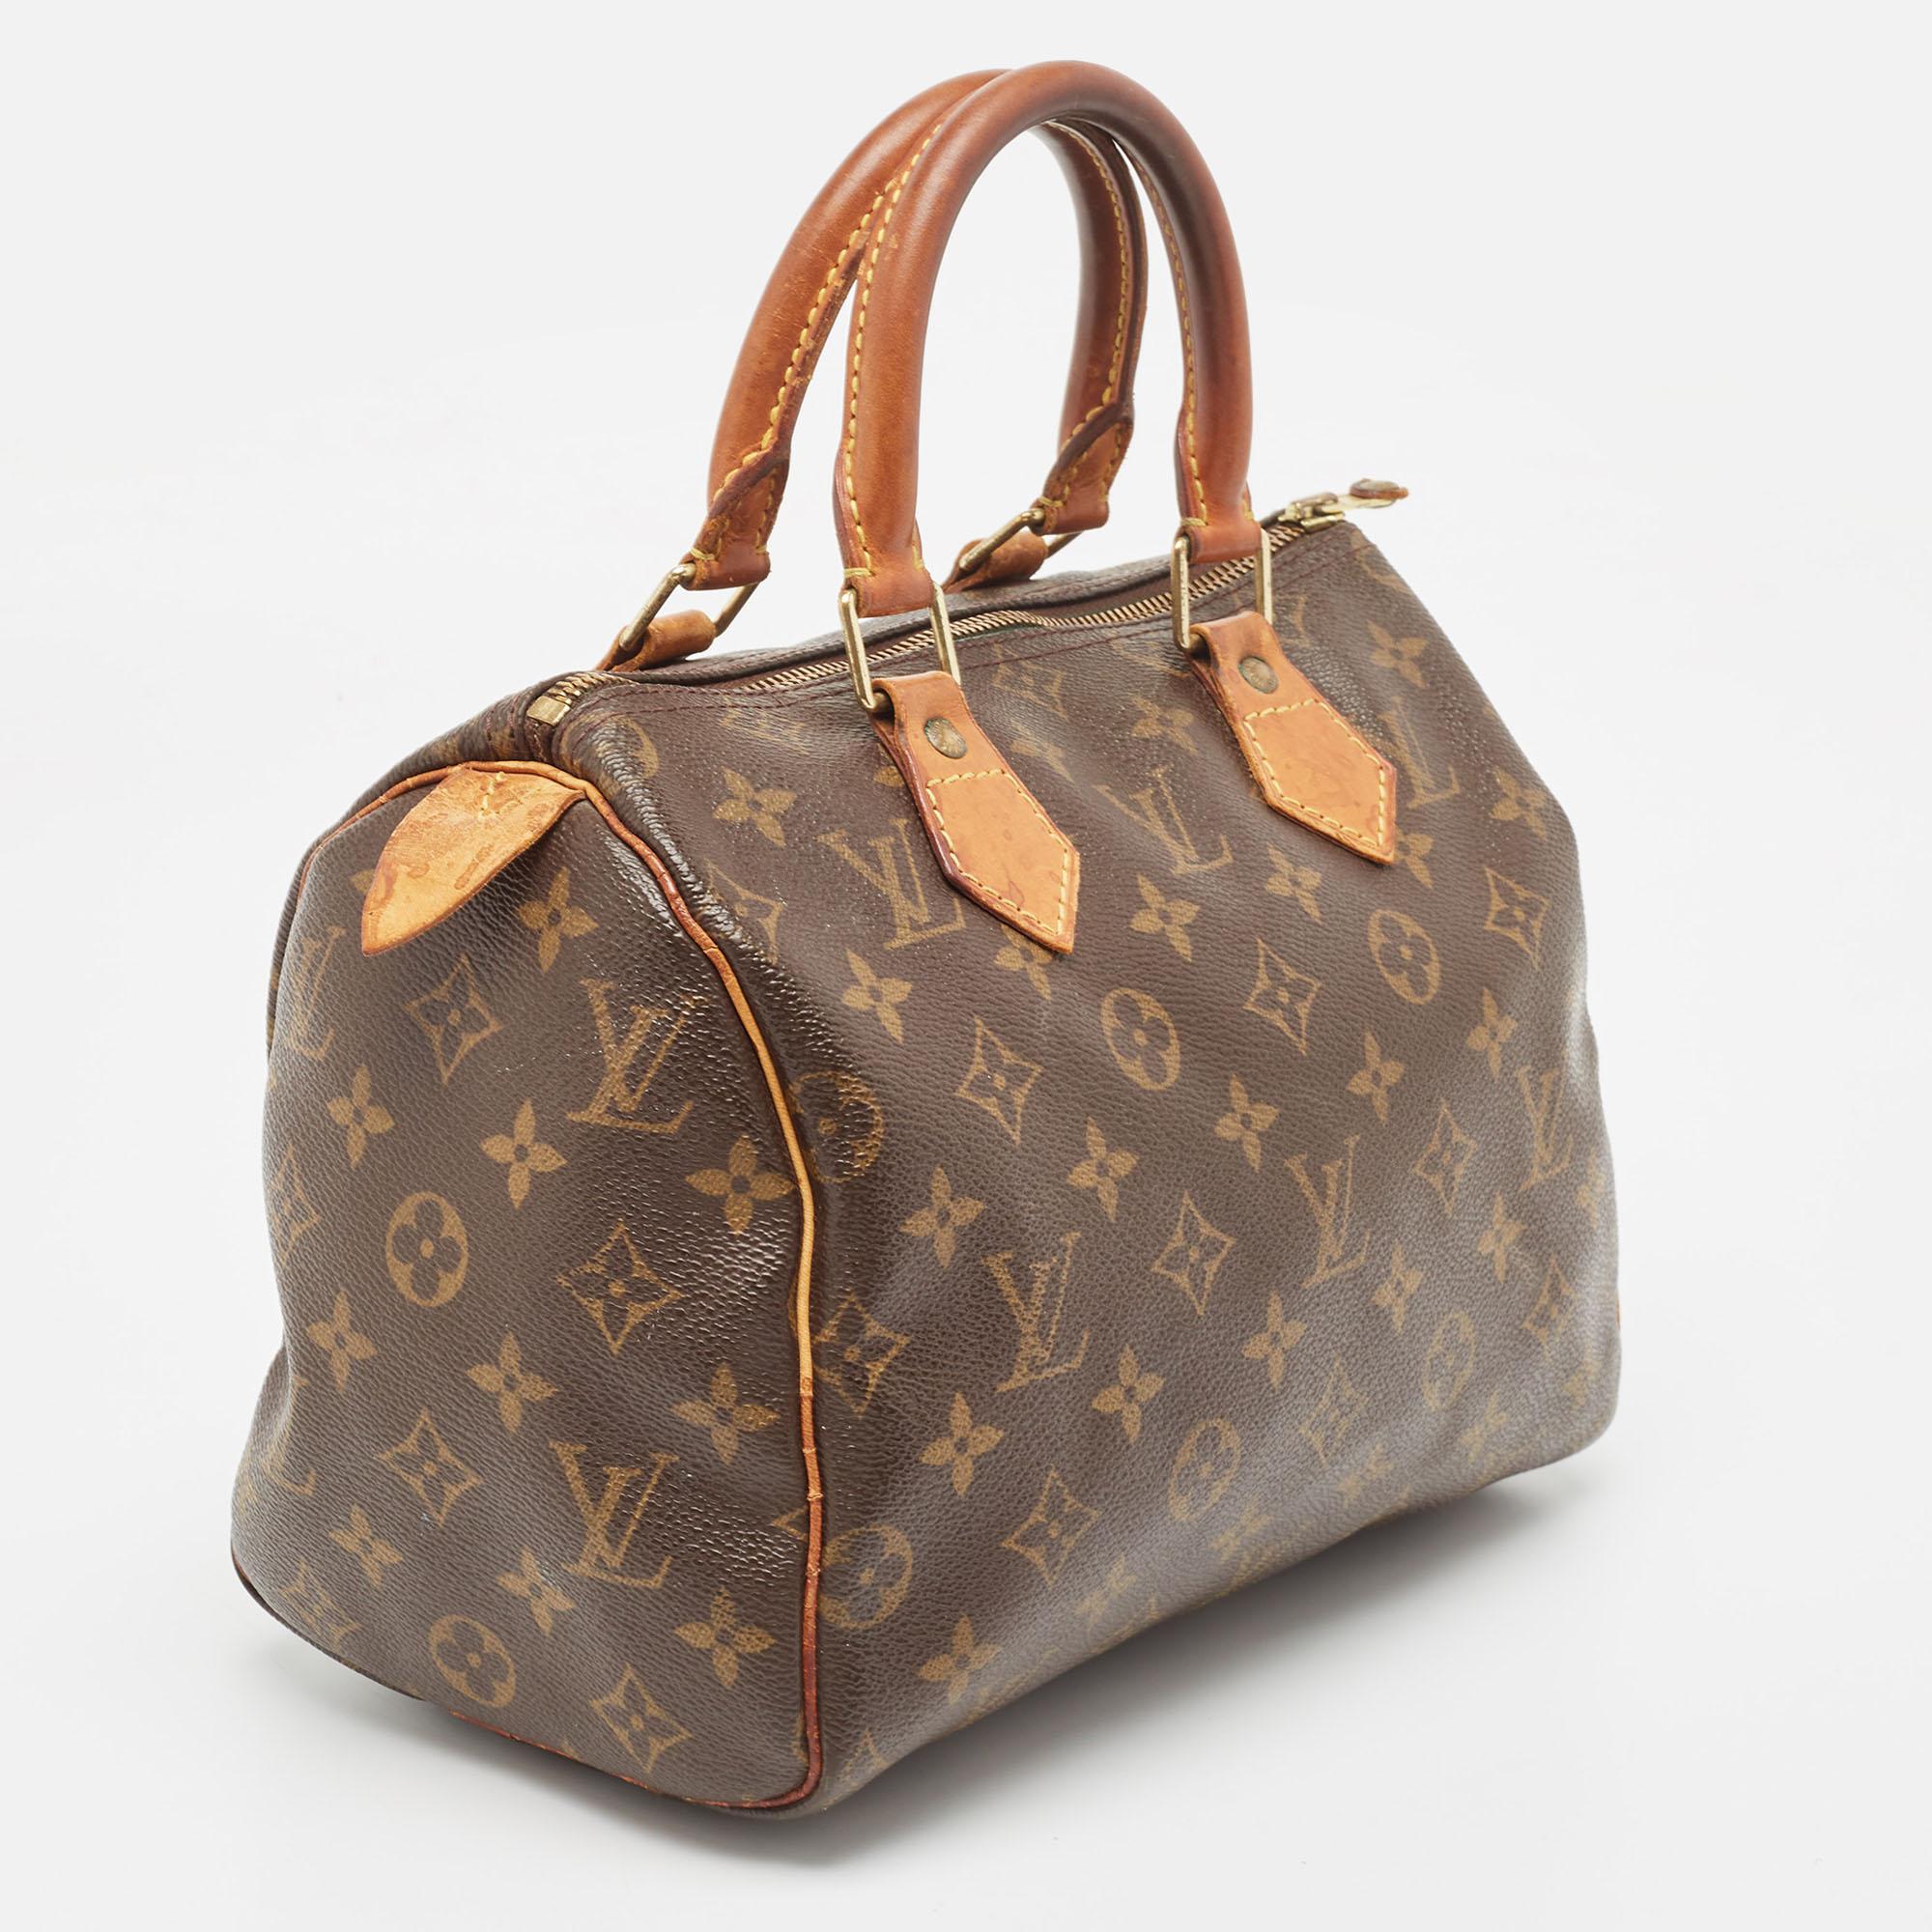 Louis Vuitton Monogram Canvas Speedy 25 Bag In Good Condition For Sale In Dubai, Al Qouz 2